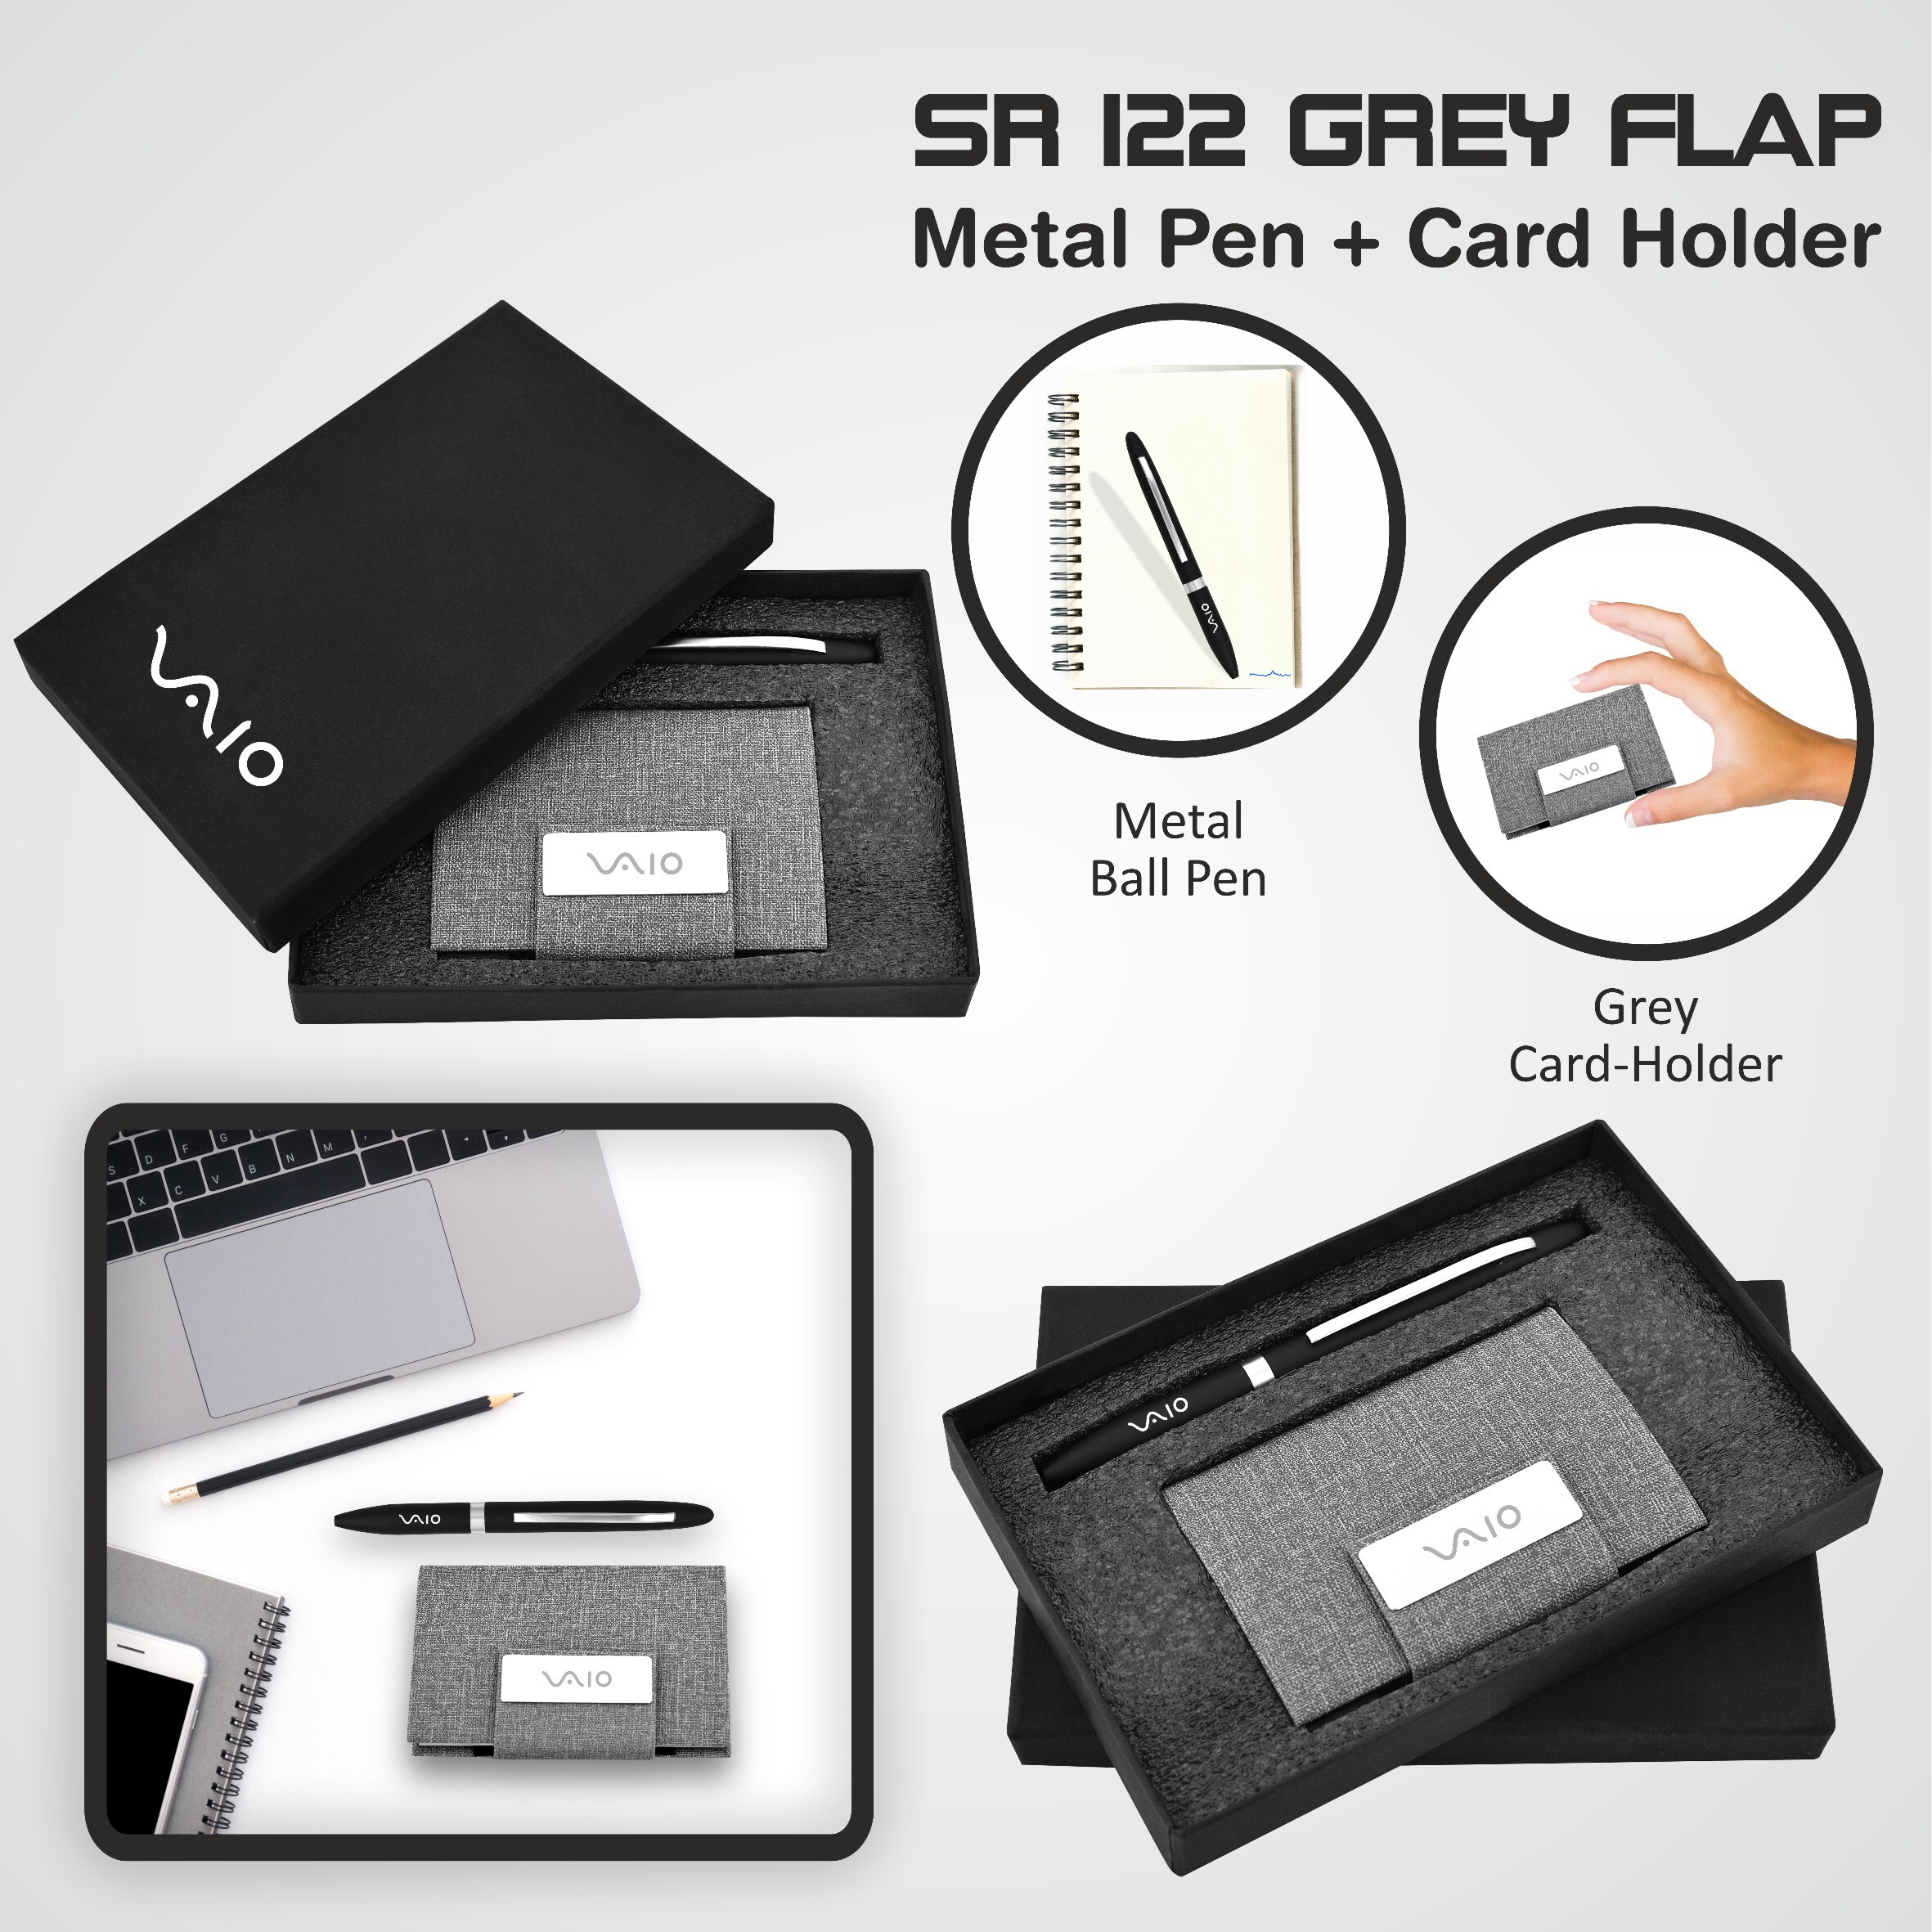 2 in 1 Pen Cardholder Combo Gift Set Sr 122 Grey Flap